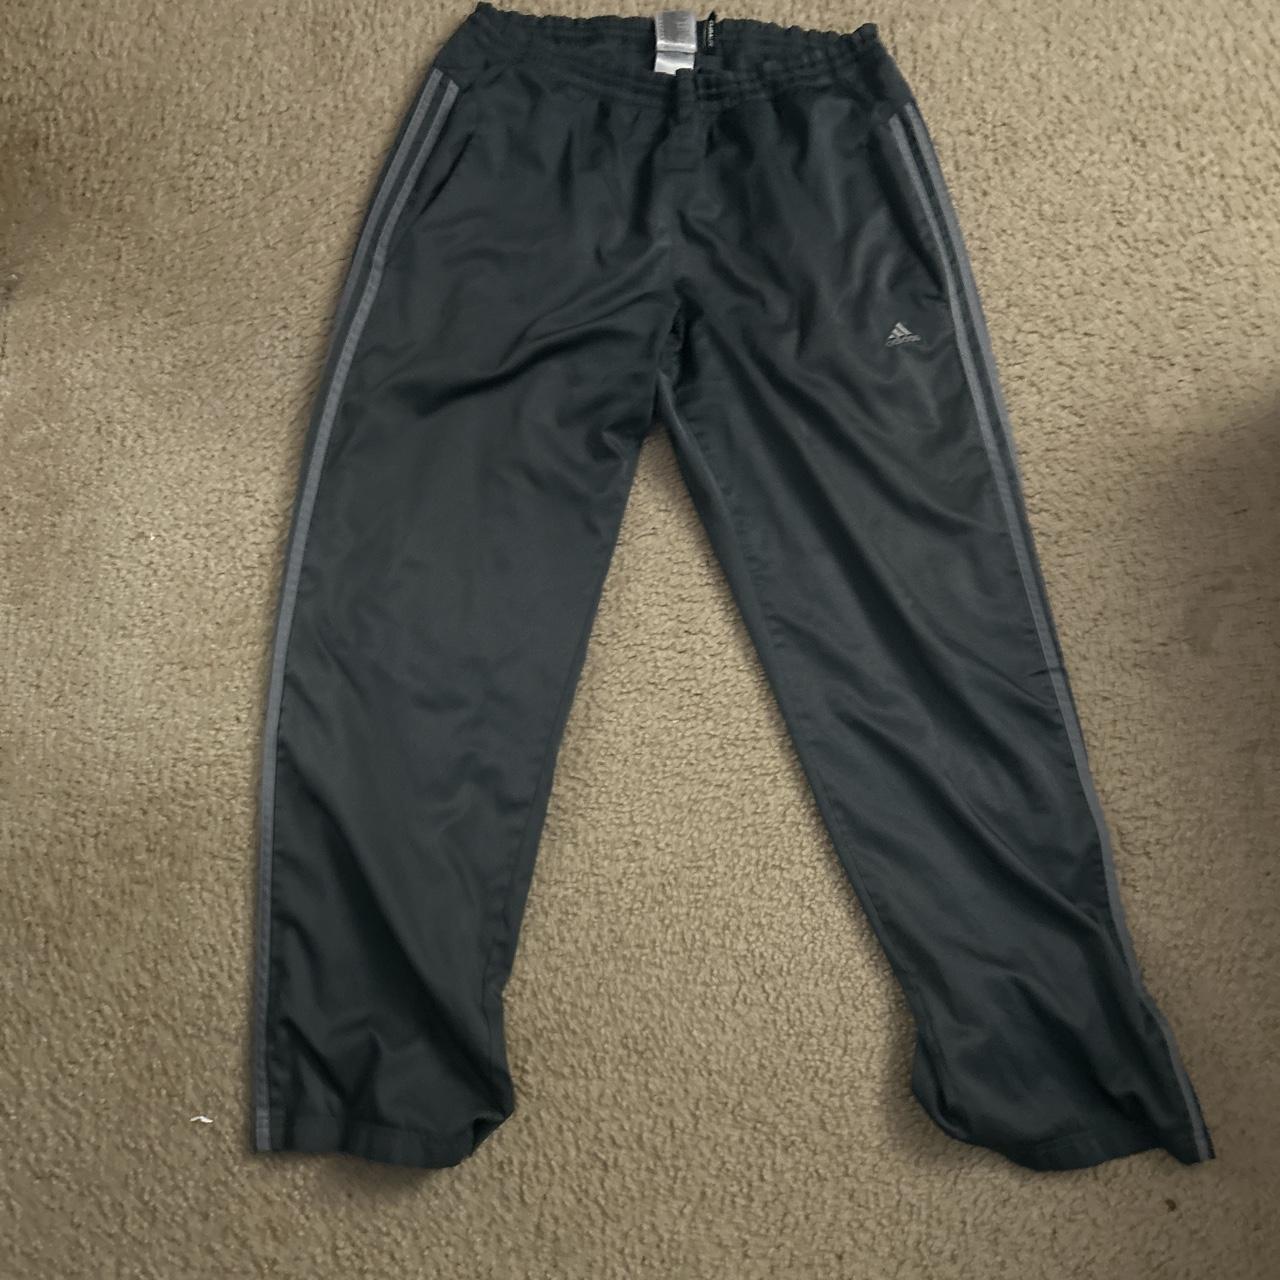 Adidas Gray and Black Baggy Sweatpants #Adidas - Depop